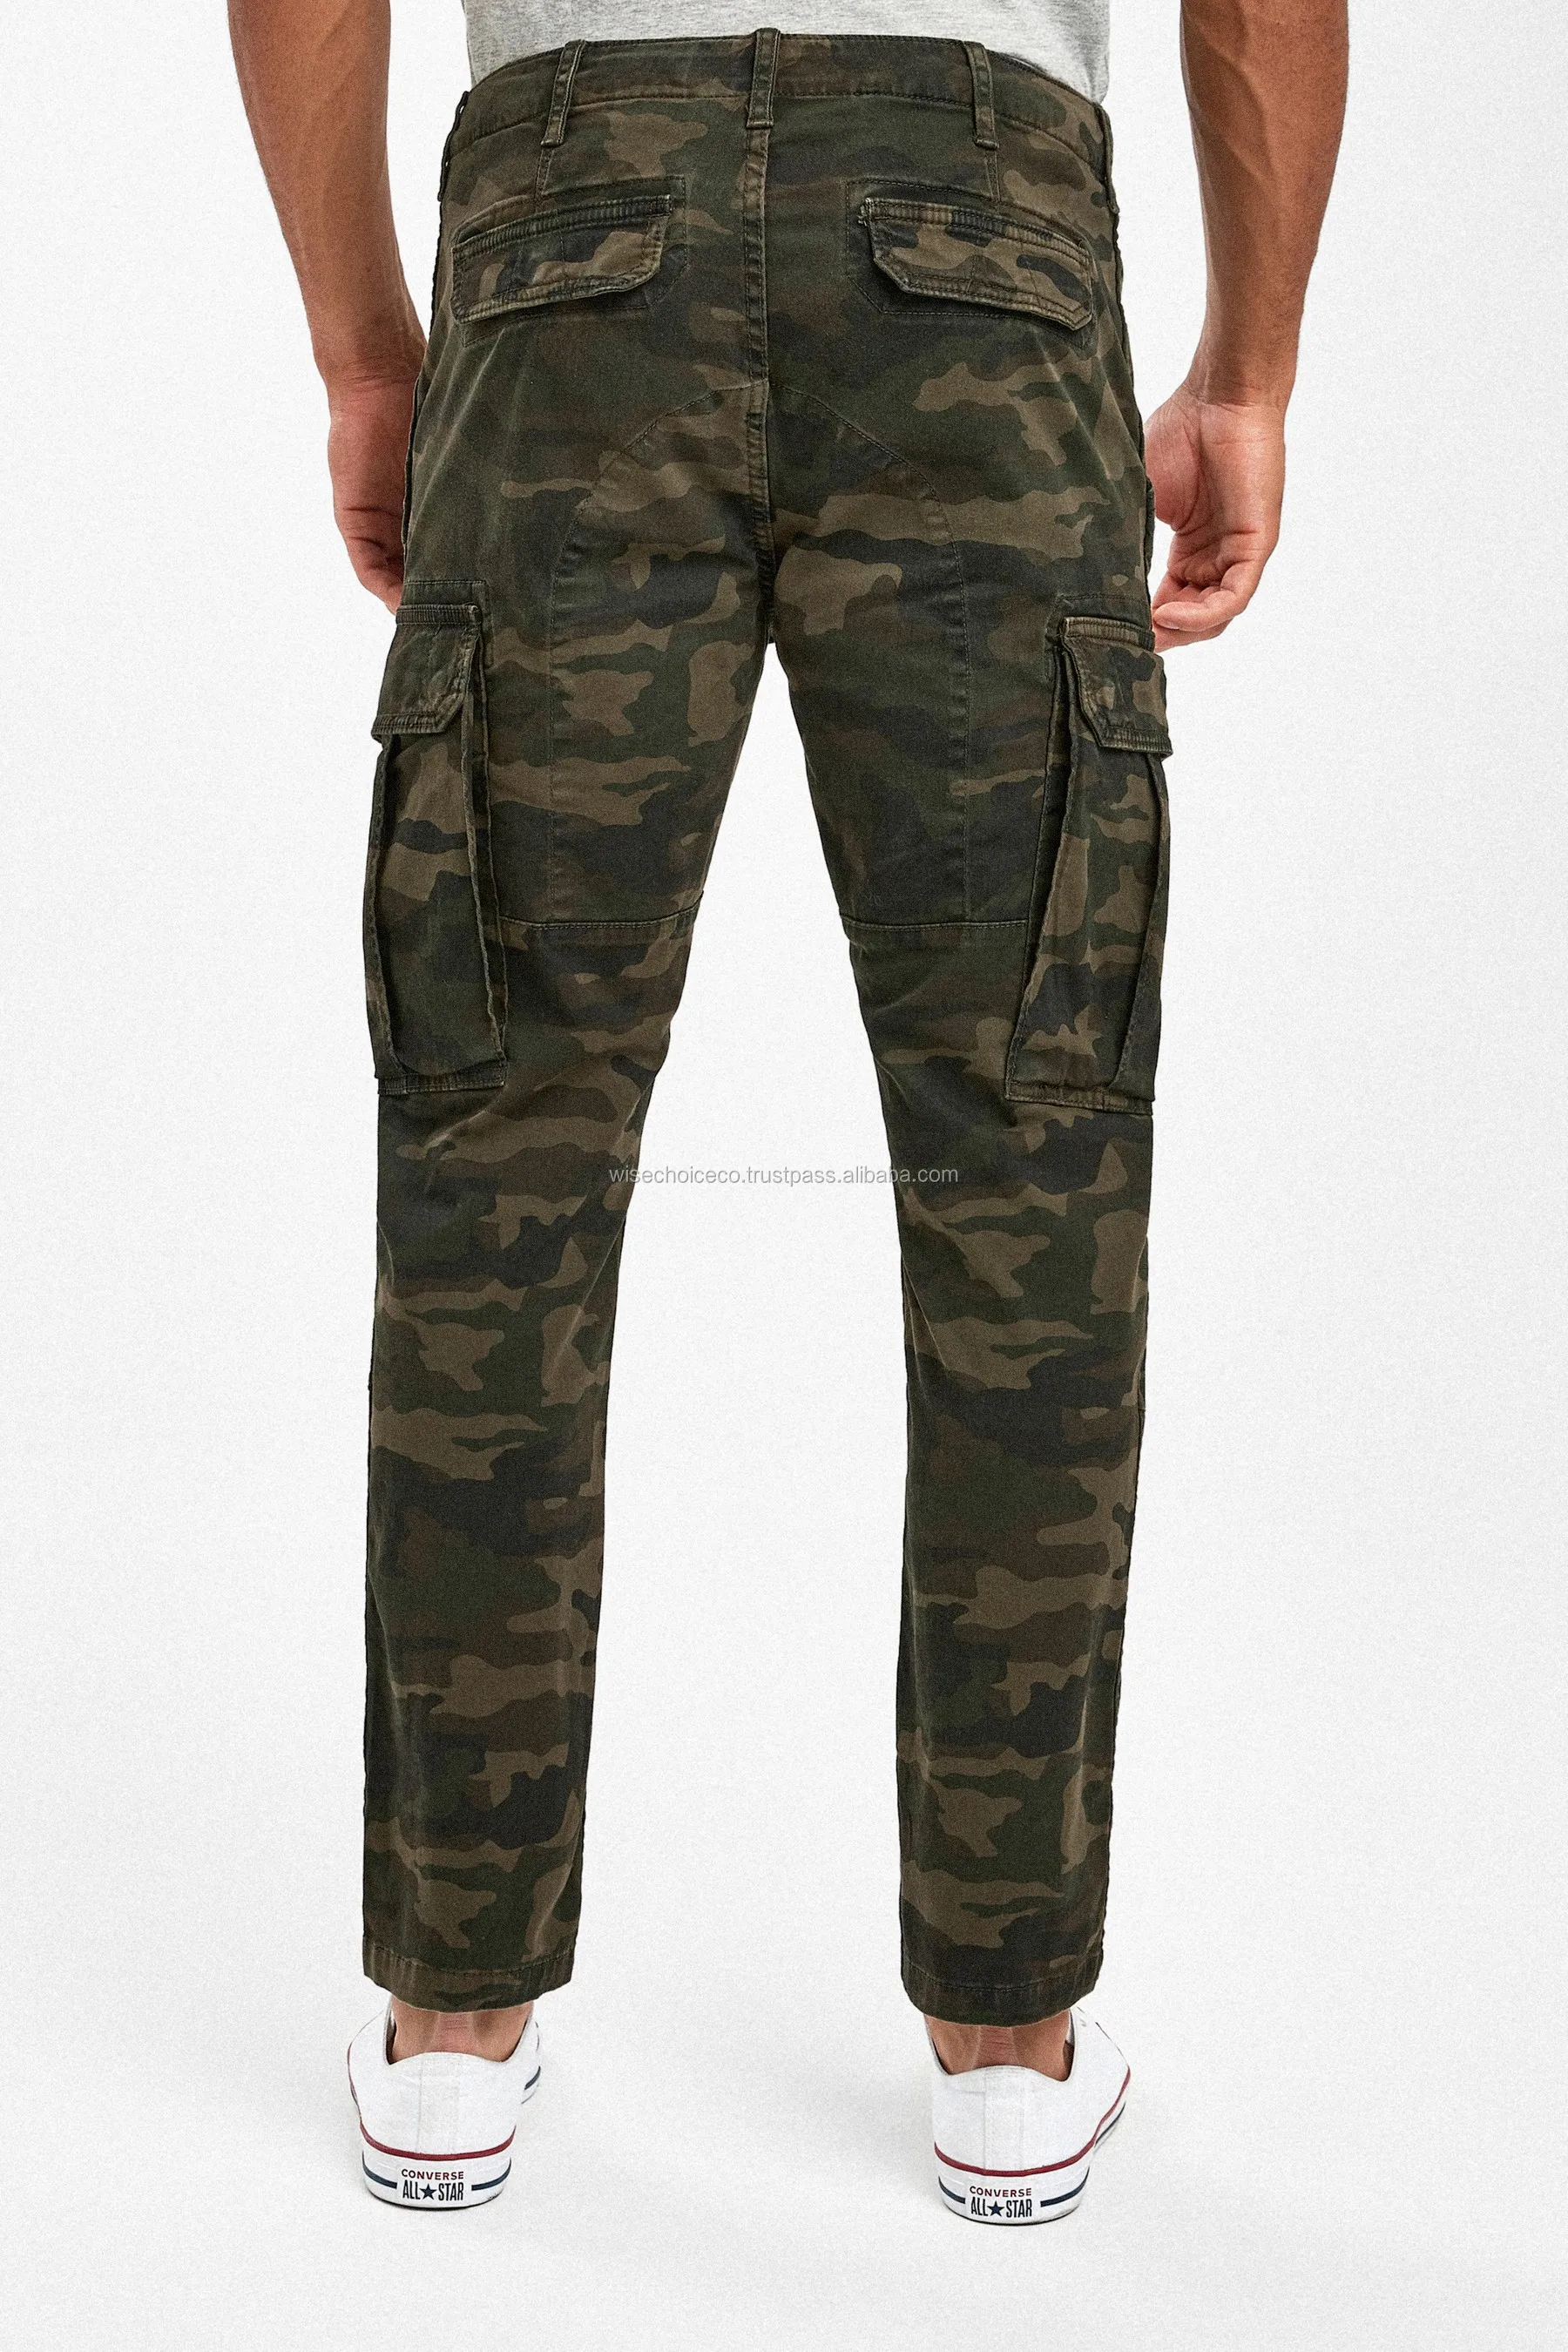 Military Men Elastic Waist Cargo Work Plain Pants Combat Camo Army Style Trouser